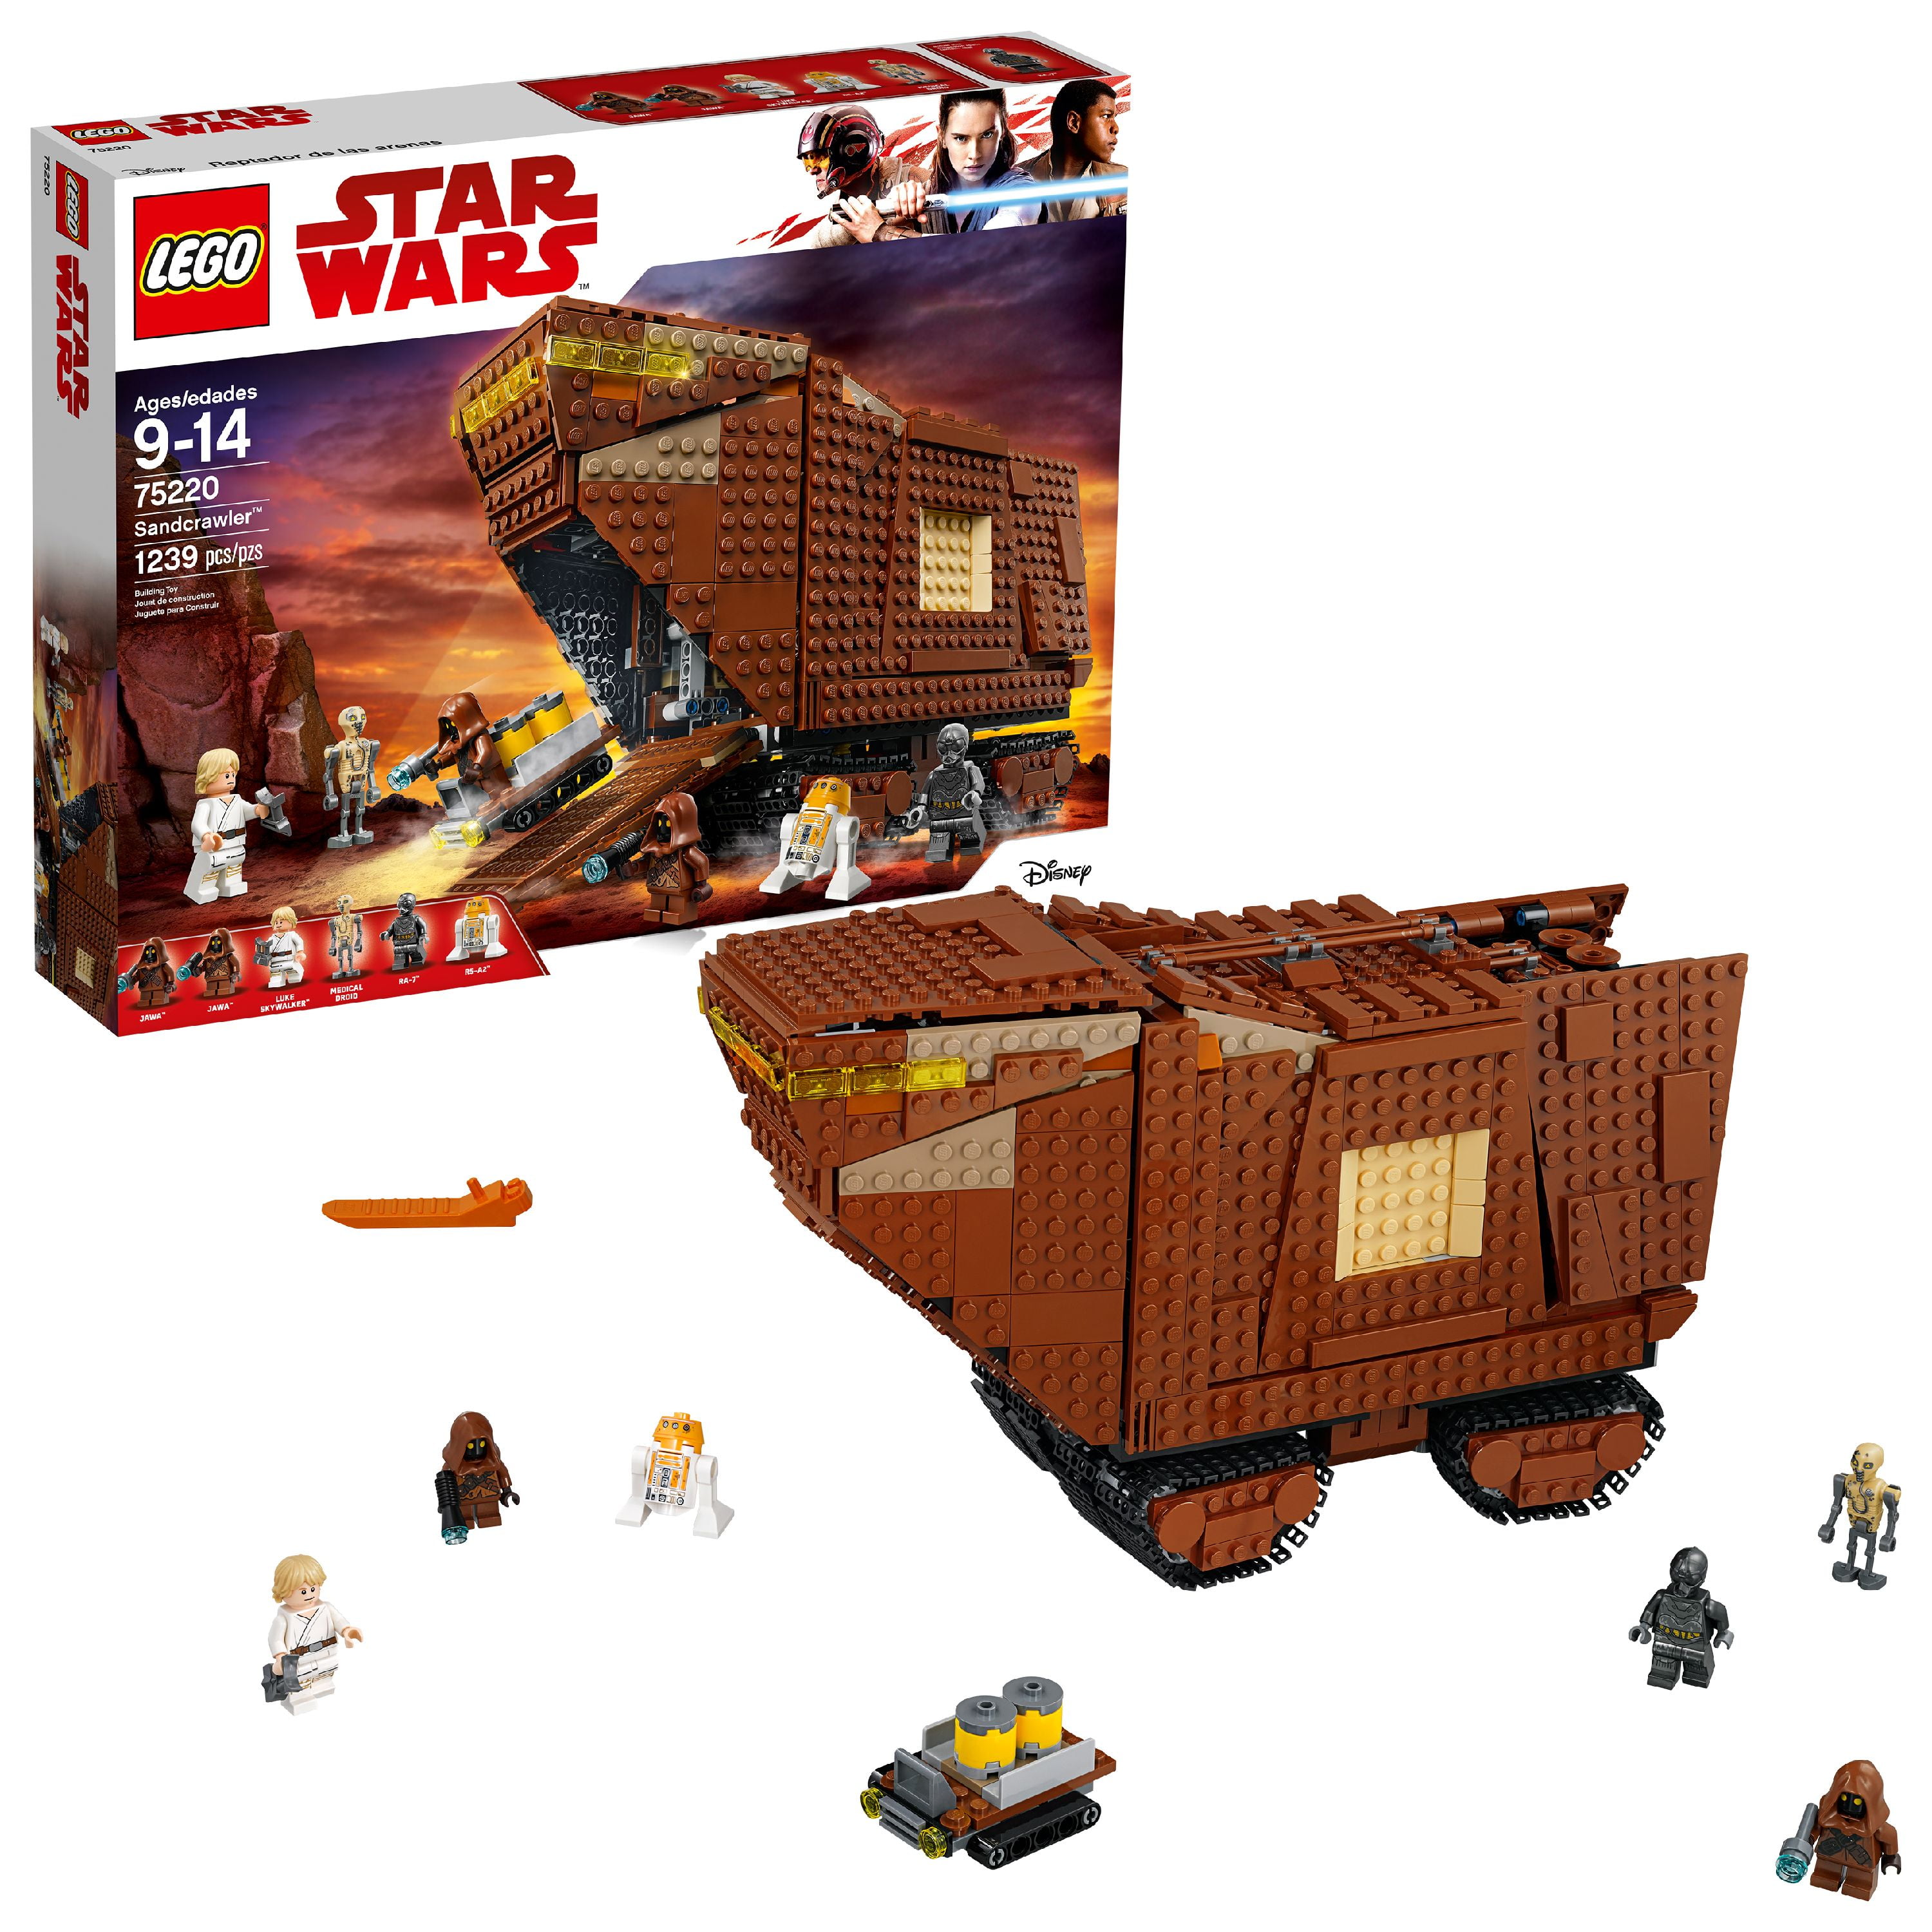 LEGO Star Wars Sandcrawler 75220 Building Set Pieces) -